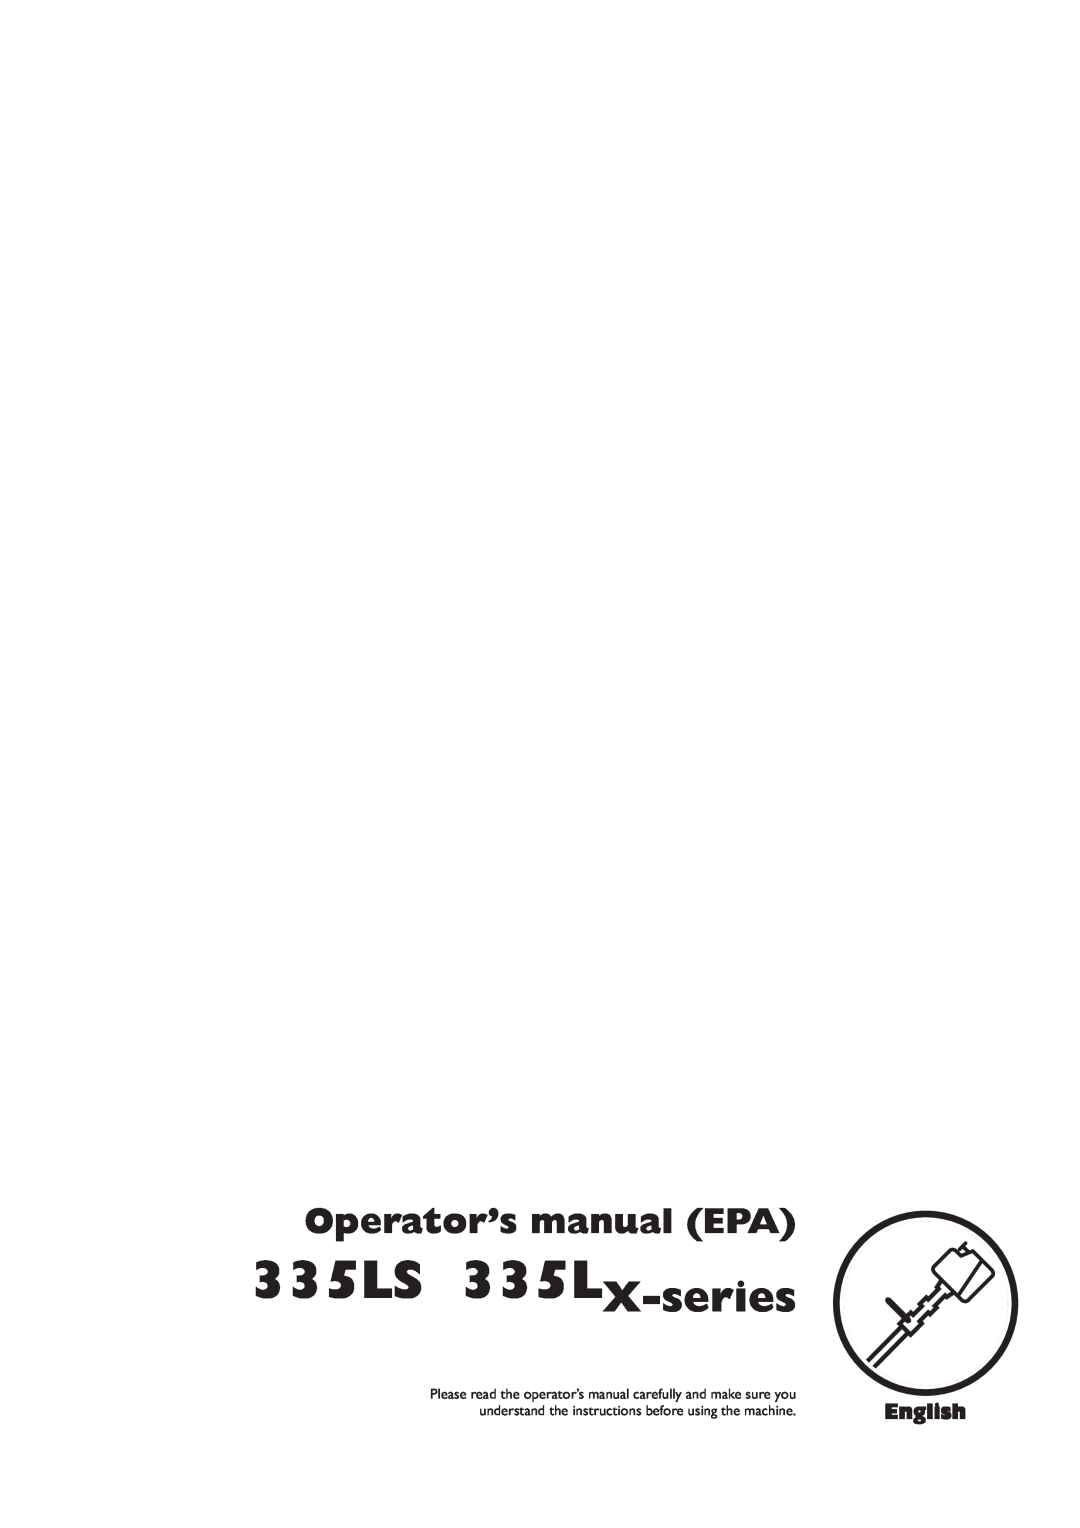 Husqvarna manual English, 335LS 335LX-series, Operator’s manual EPA 